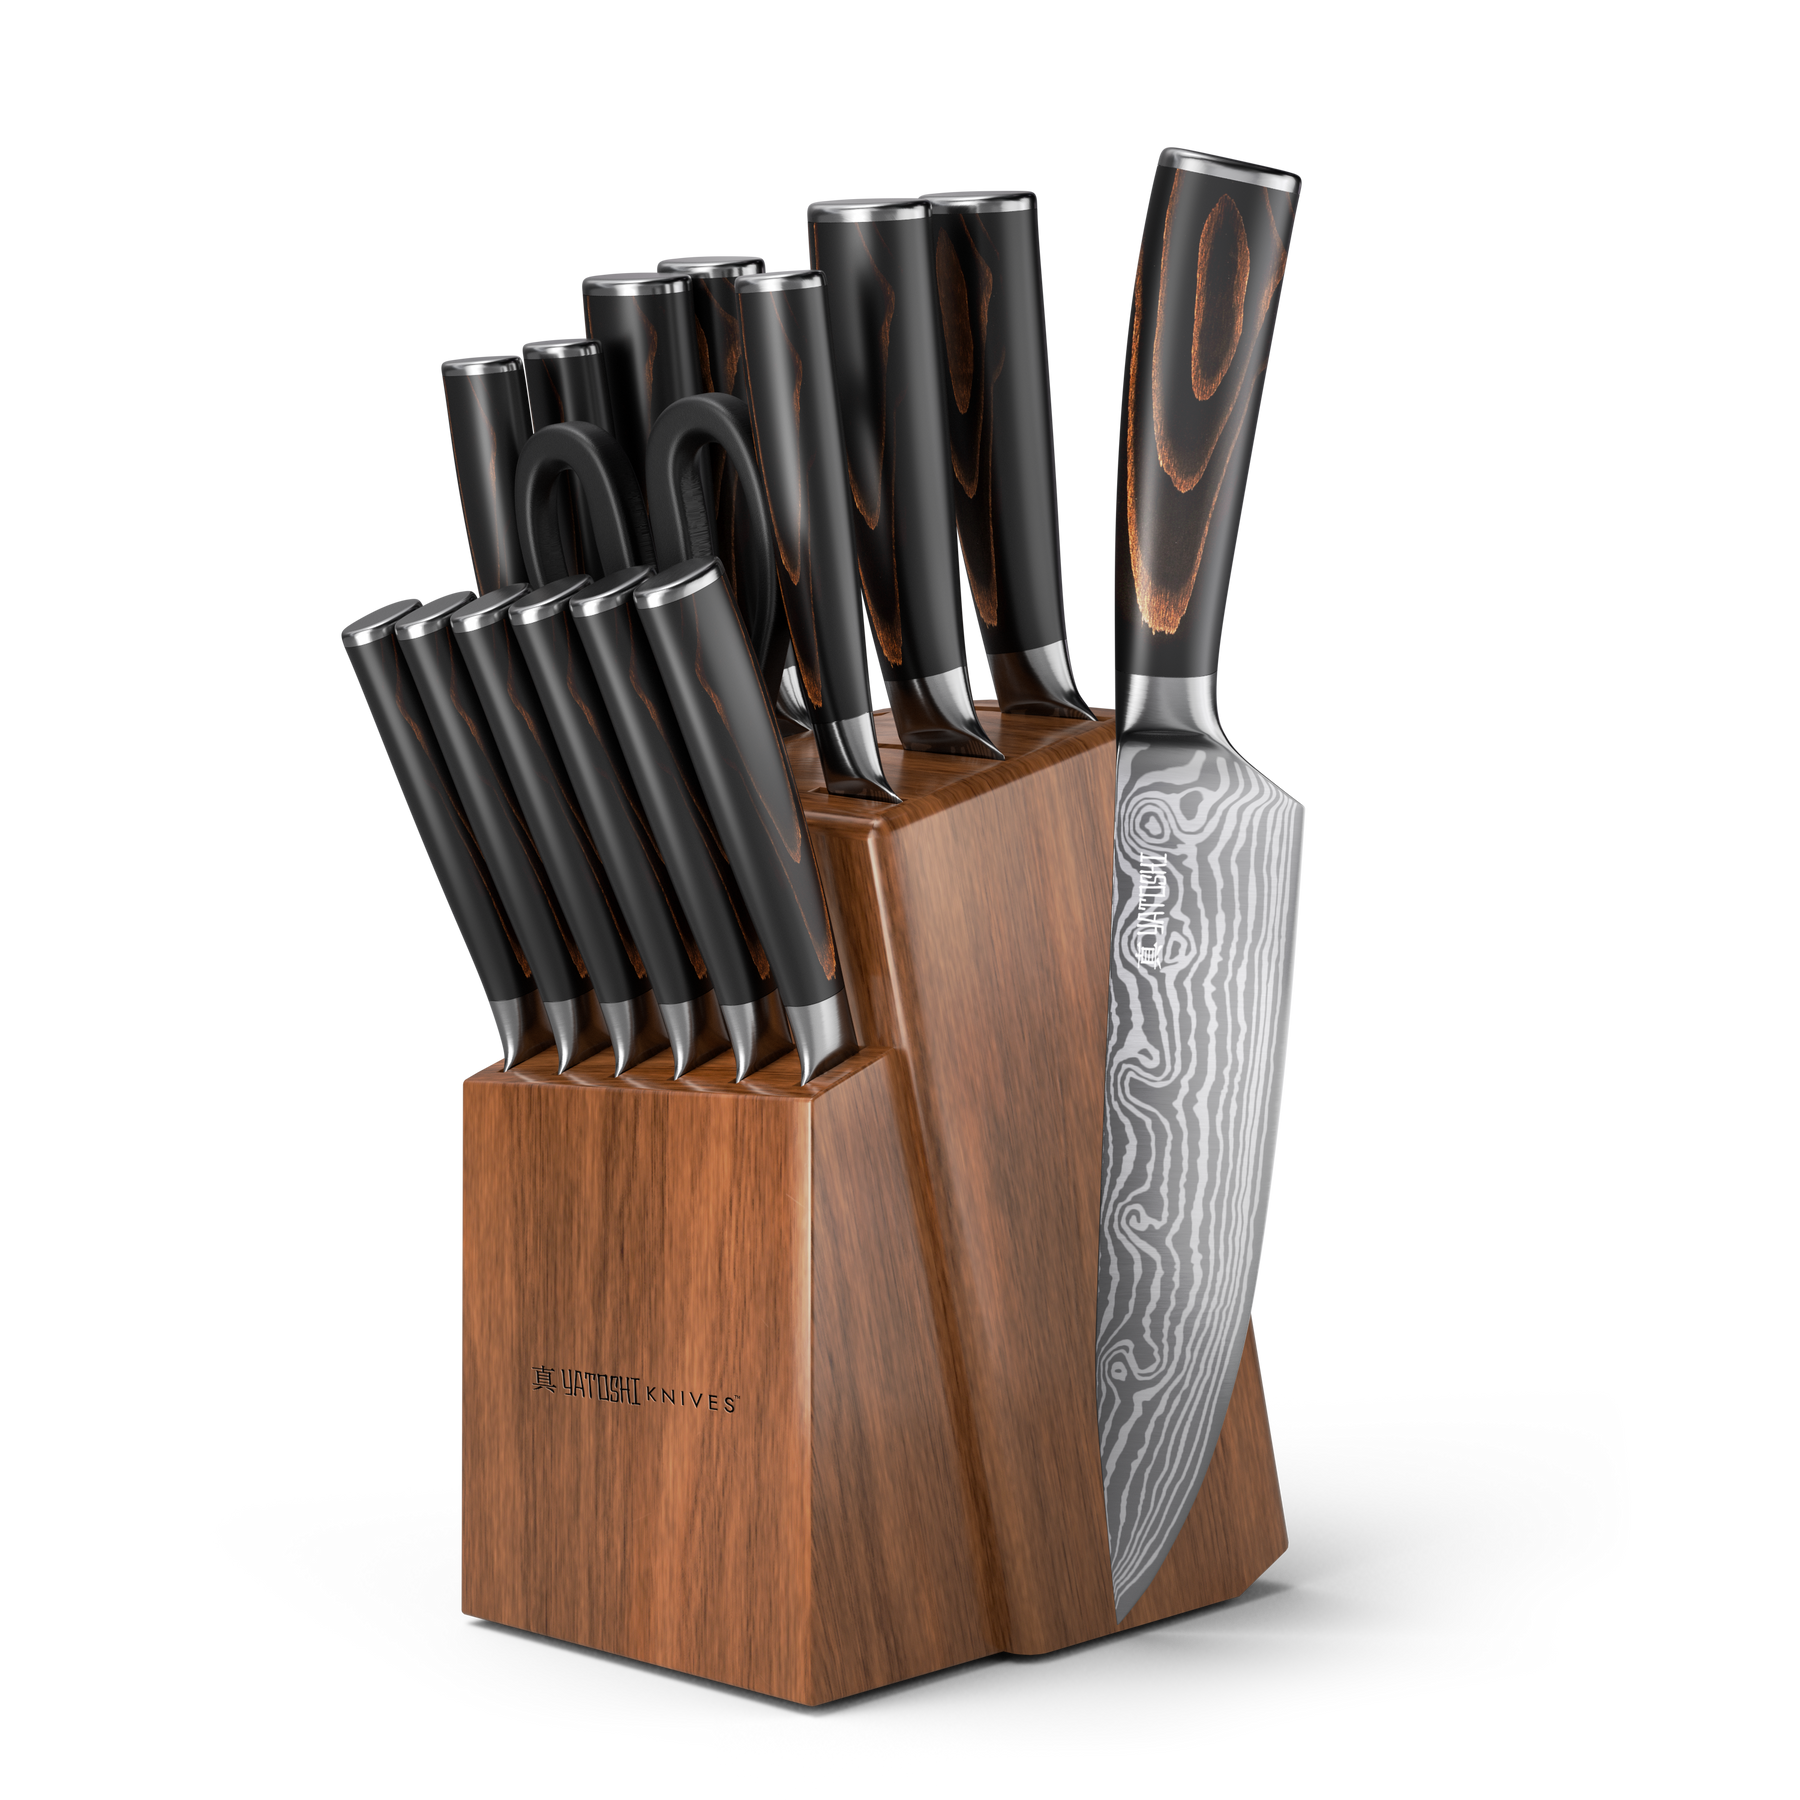 Professional Kitchen Knife Block Set